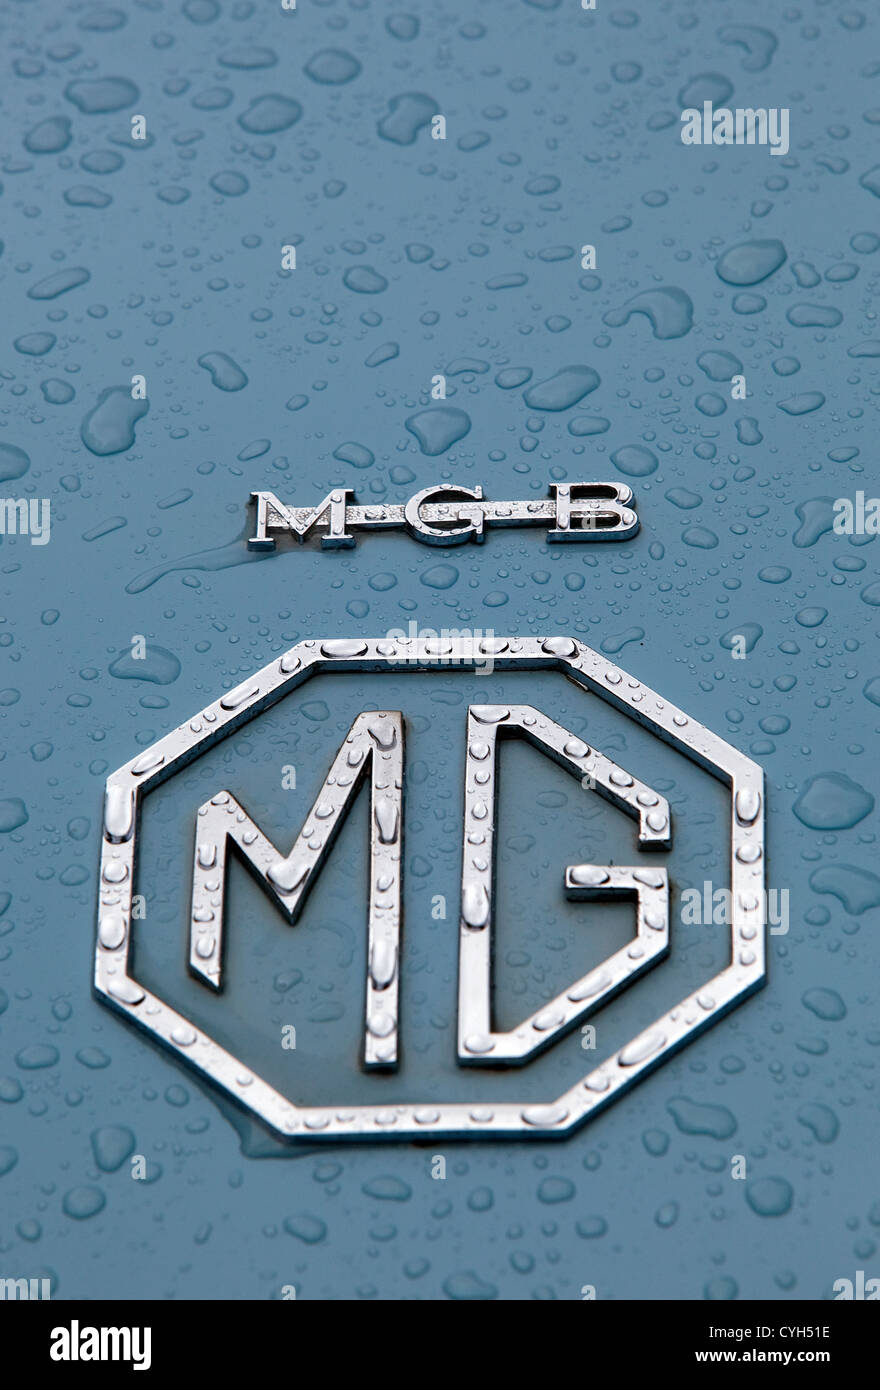 Mgb car -Fotos und -Bildmaterial in hoher Auflösung – Alamy